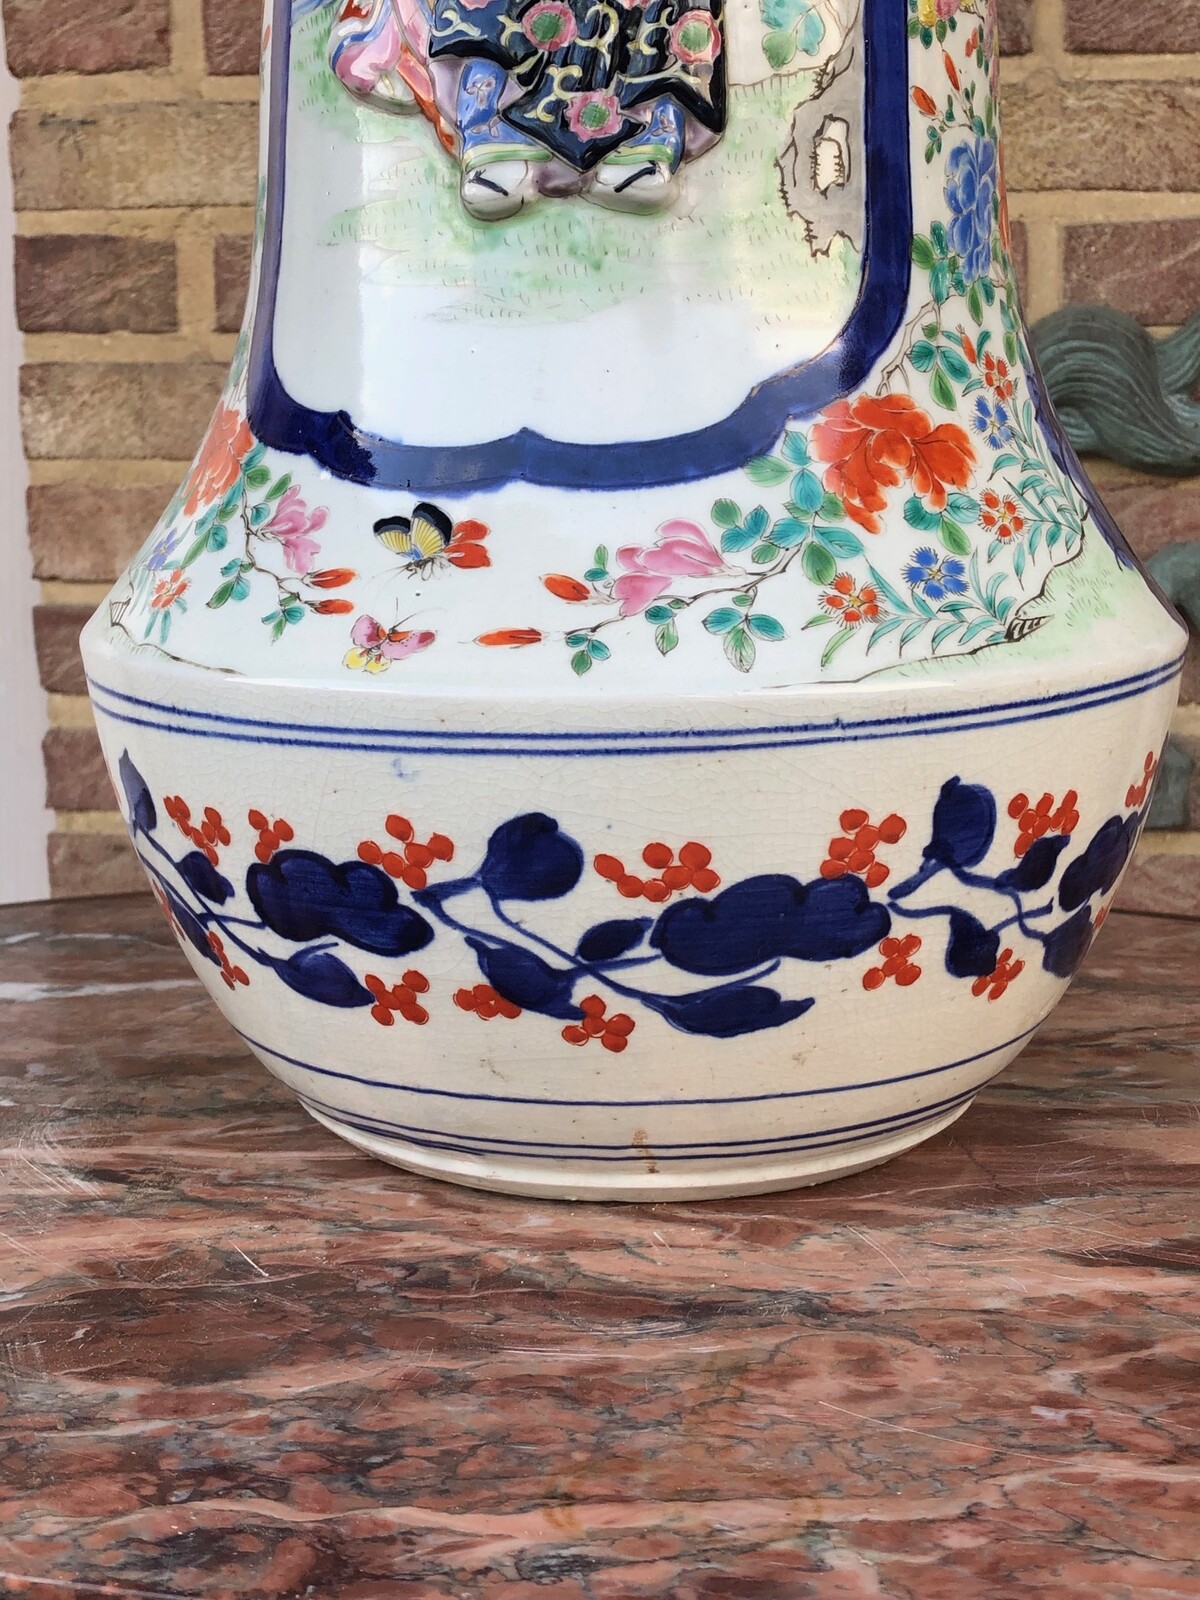 Asiatique Japanese vase with scene in relief